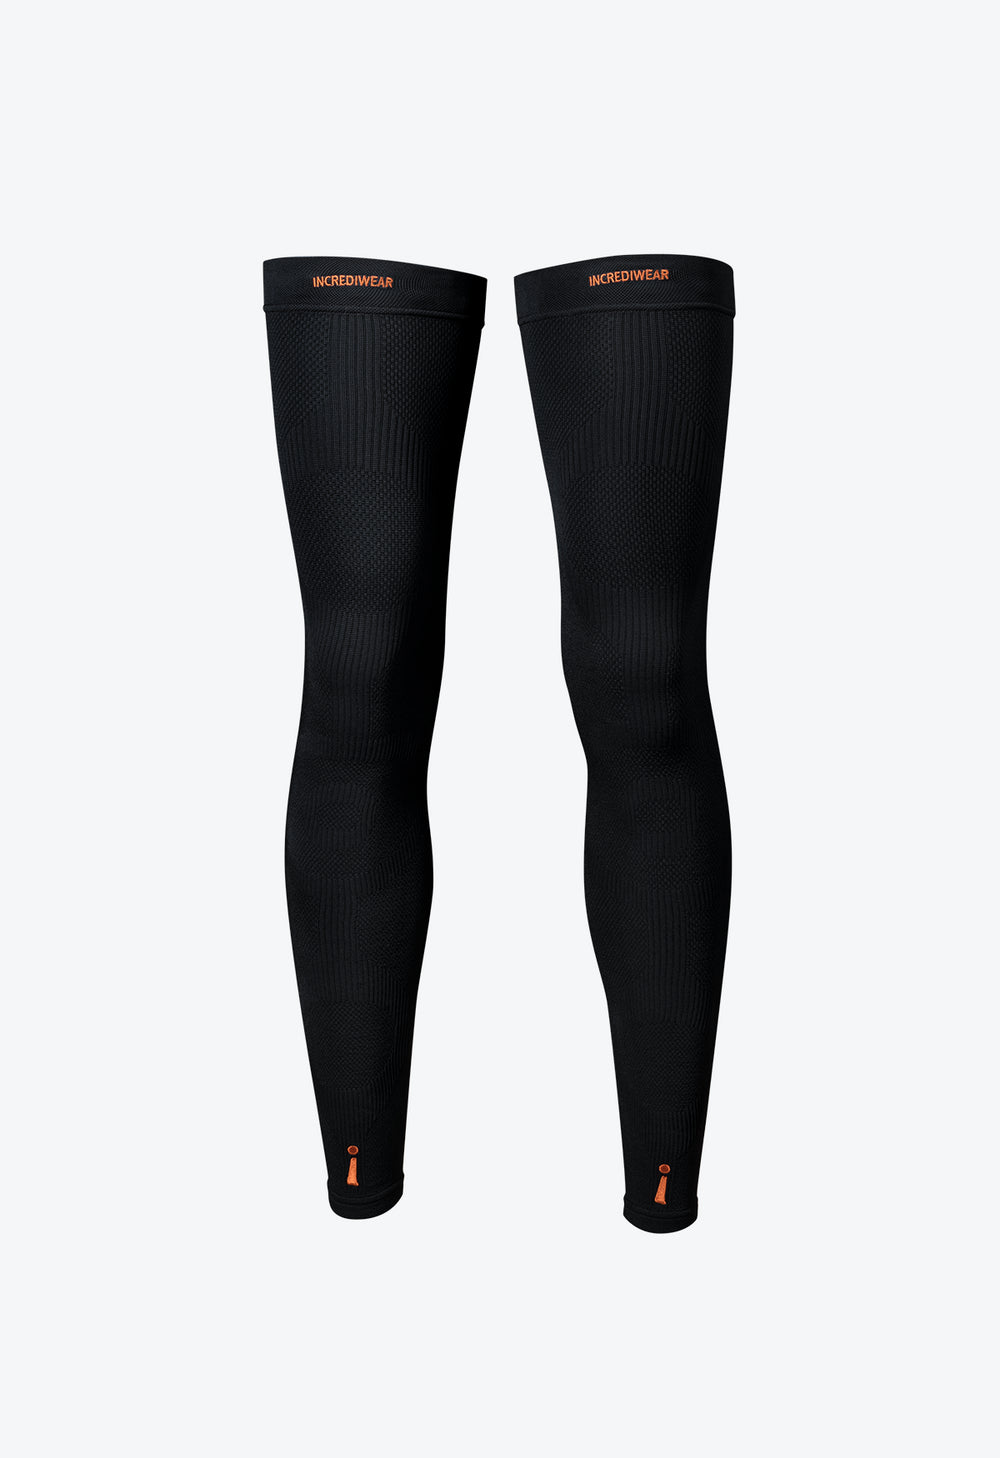 Incrediwear Leg Sleeve-Black (pair) – ACO Med Supply, Inc.